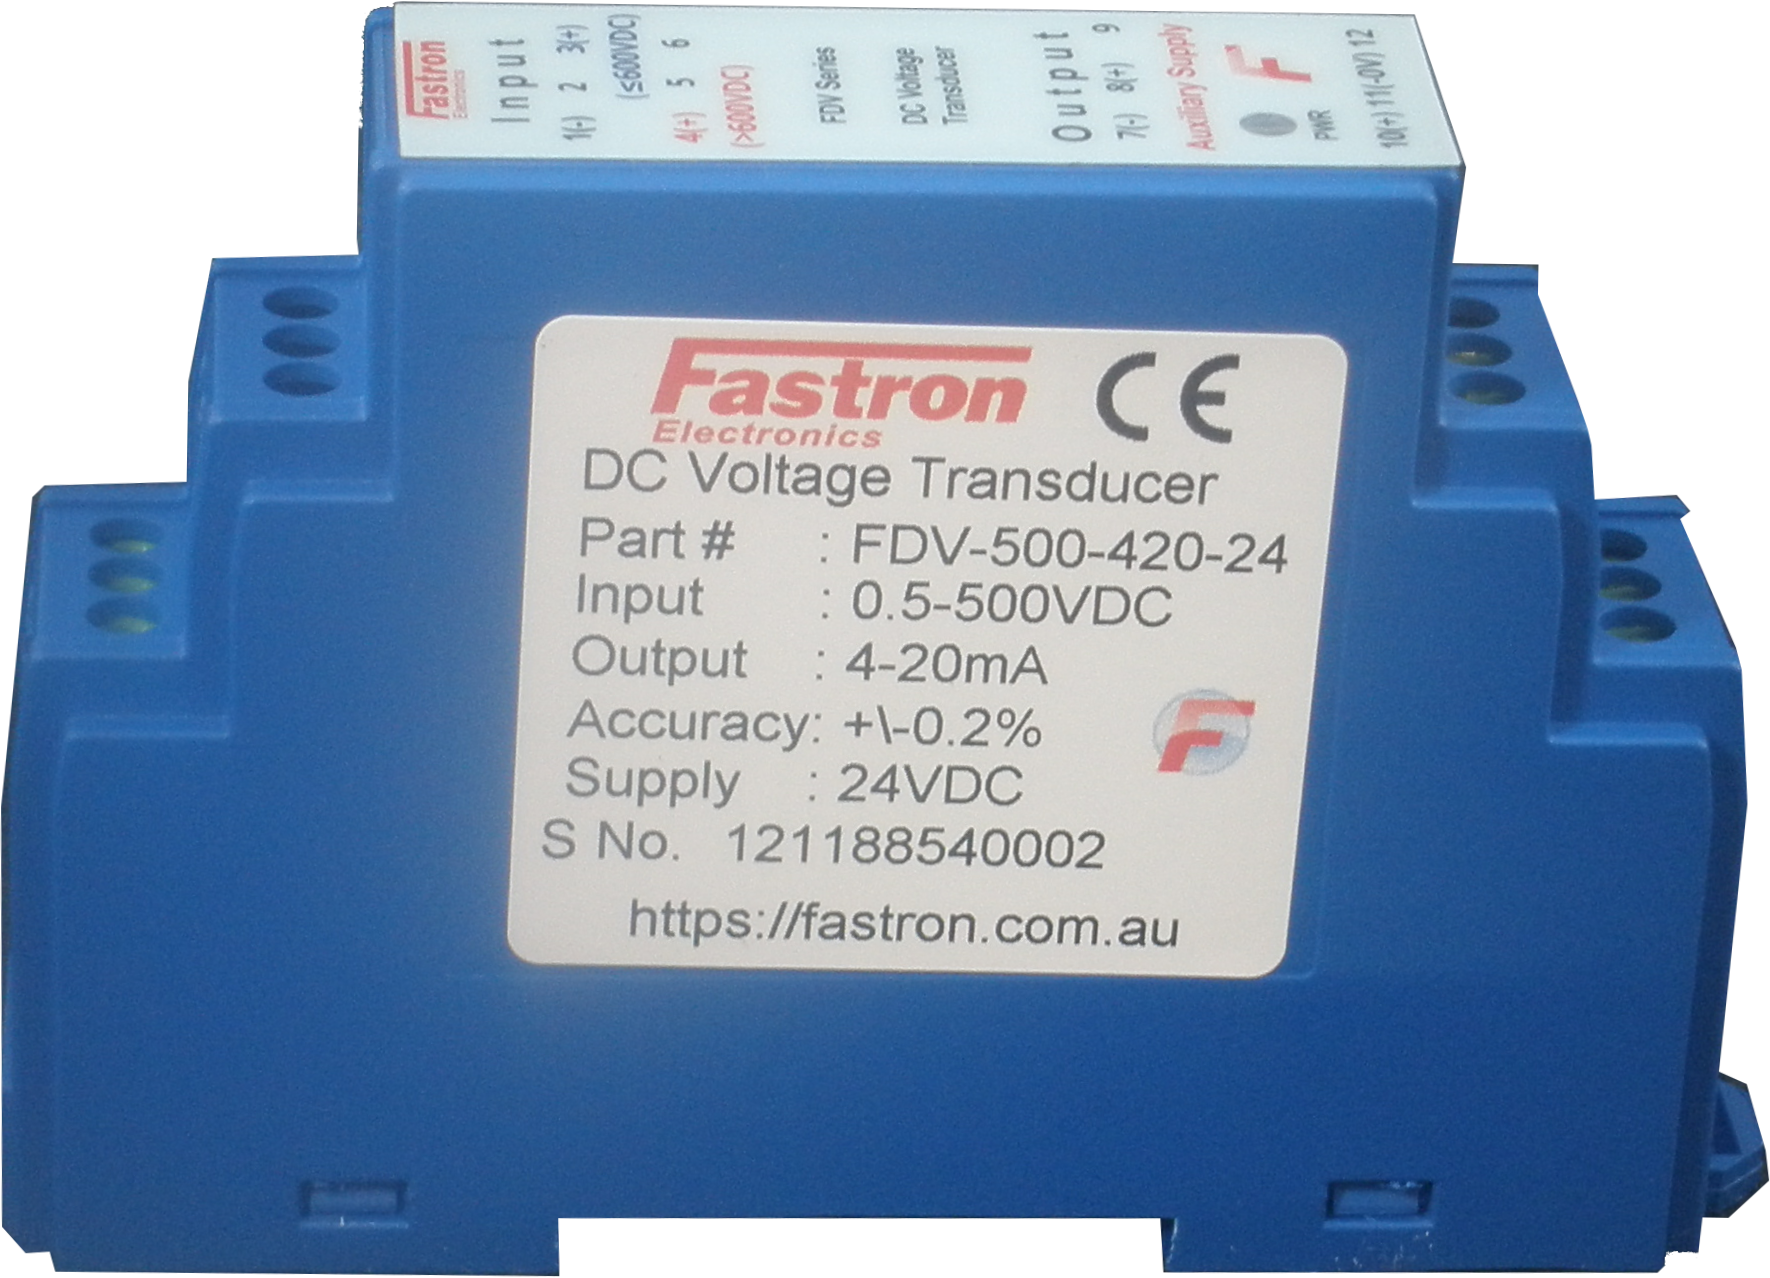 FDV-150-V10-24, DC Voltage Transducer, Din Rail Mount, 0-150VDC, 0-10V output, 24VDC Supply Voltage, 150mS Response